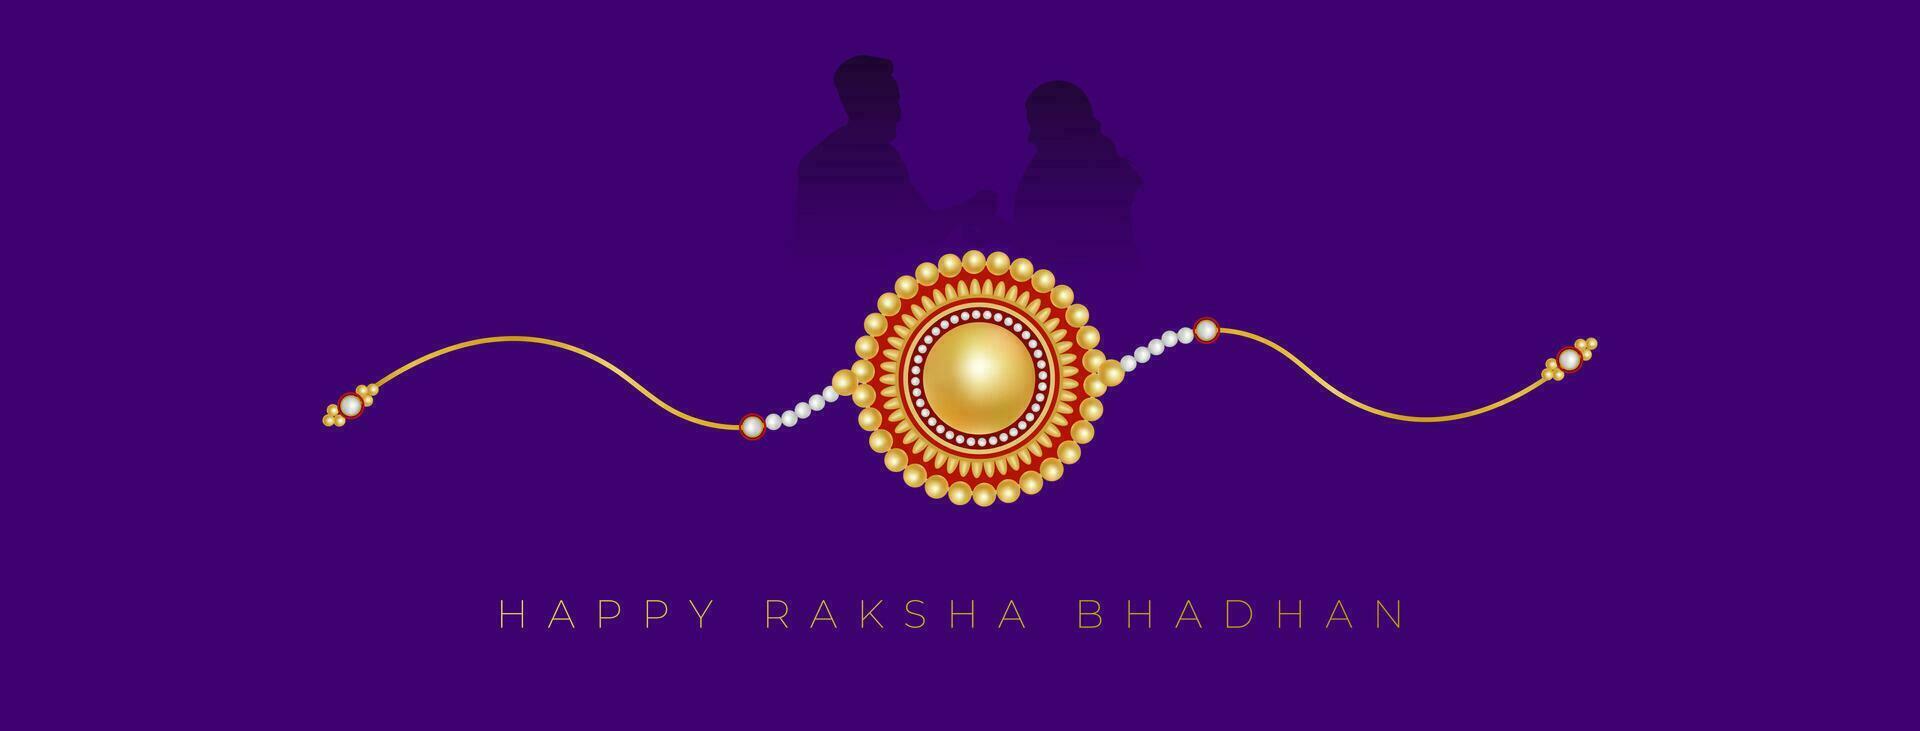 decorato rakhi per indiano Festival di fratello e sorella bonding celebrazione Raksha bandhan vettore